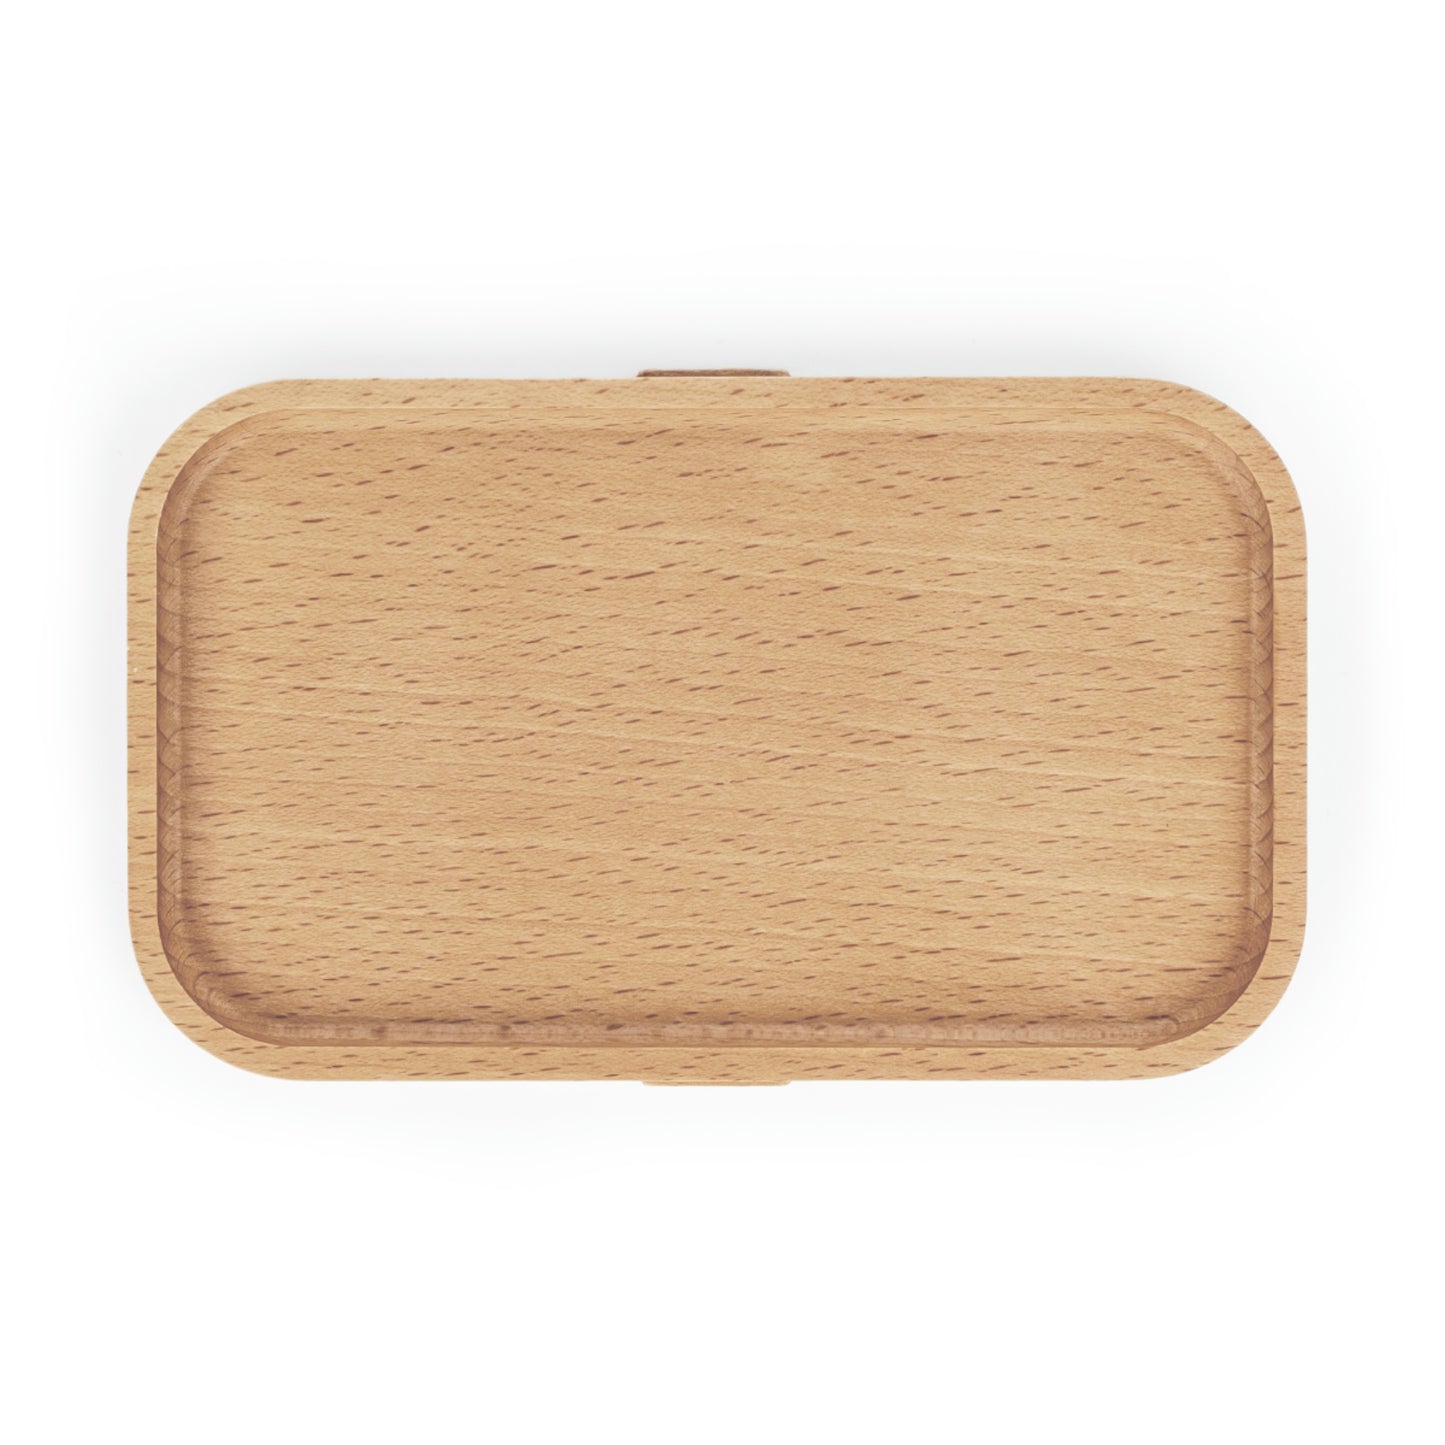 Picnic - Bento Lunch Box